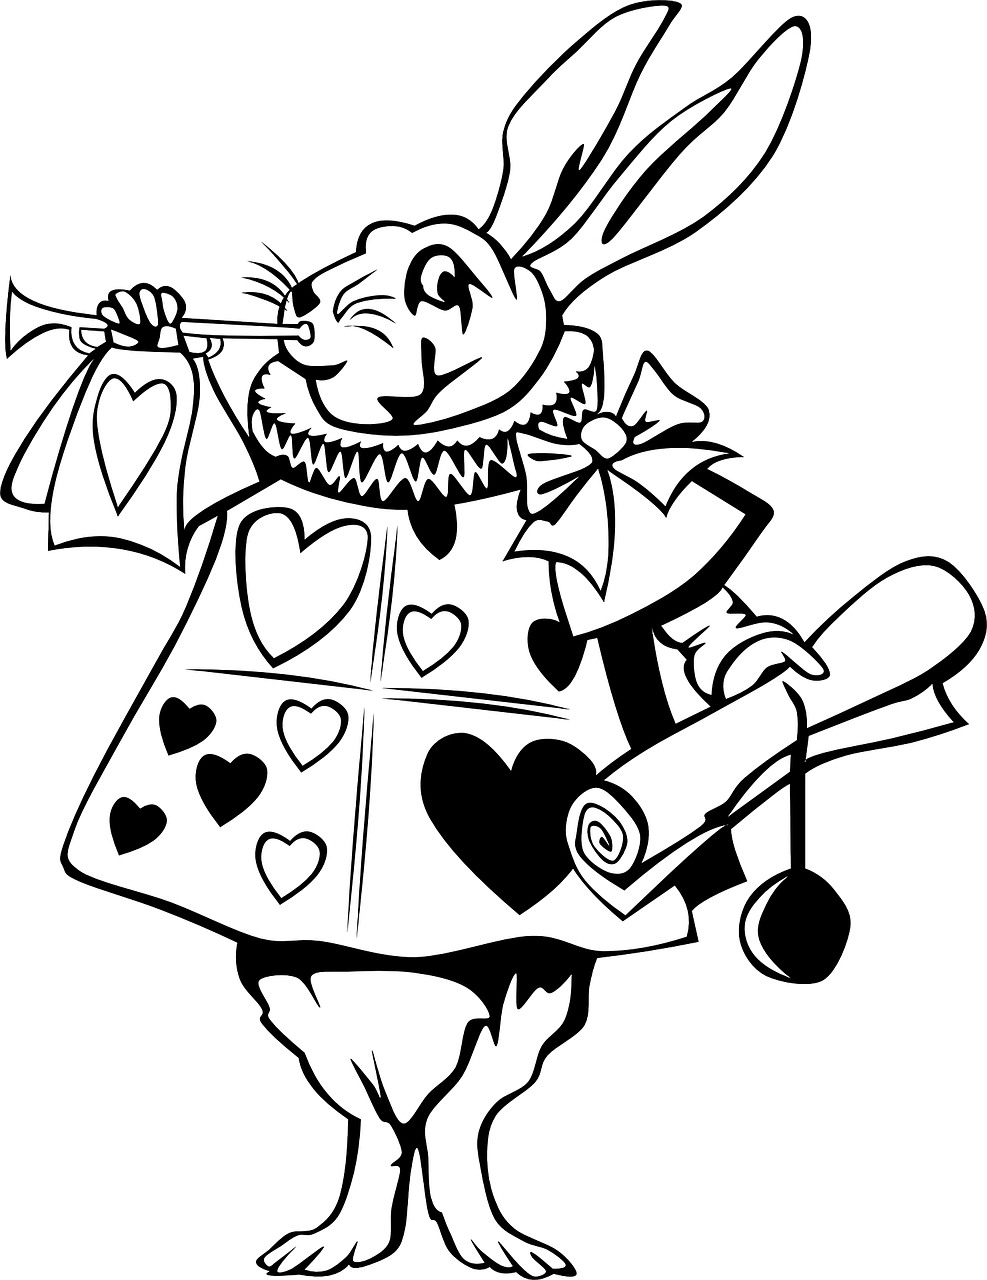 Download rabbit alice in wonderland character royalty